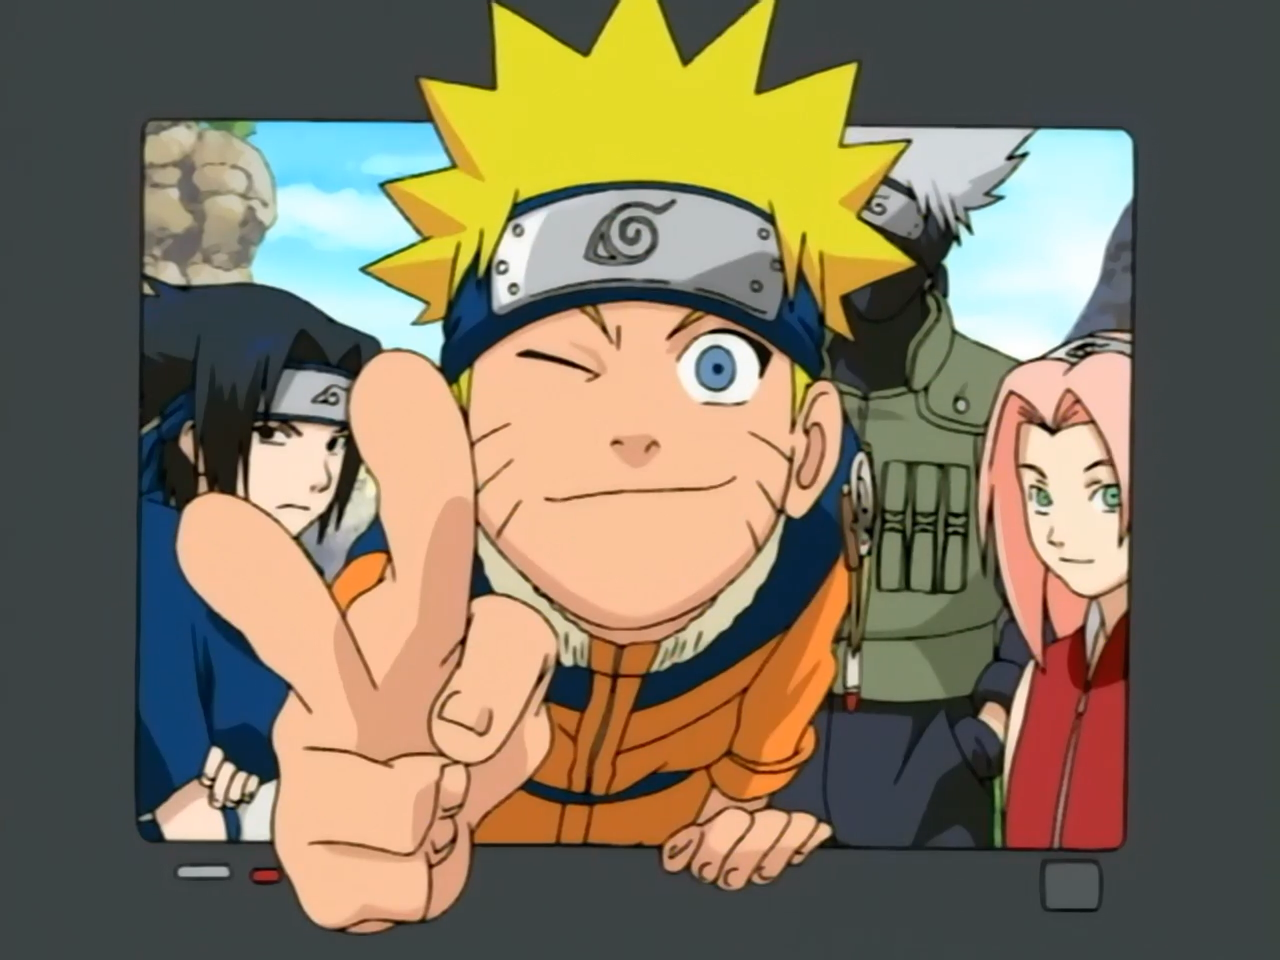 Naruto Shippūden - Episódio 261: Pelo meu Amigo, Wiki Naruto